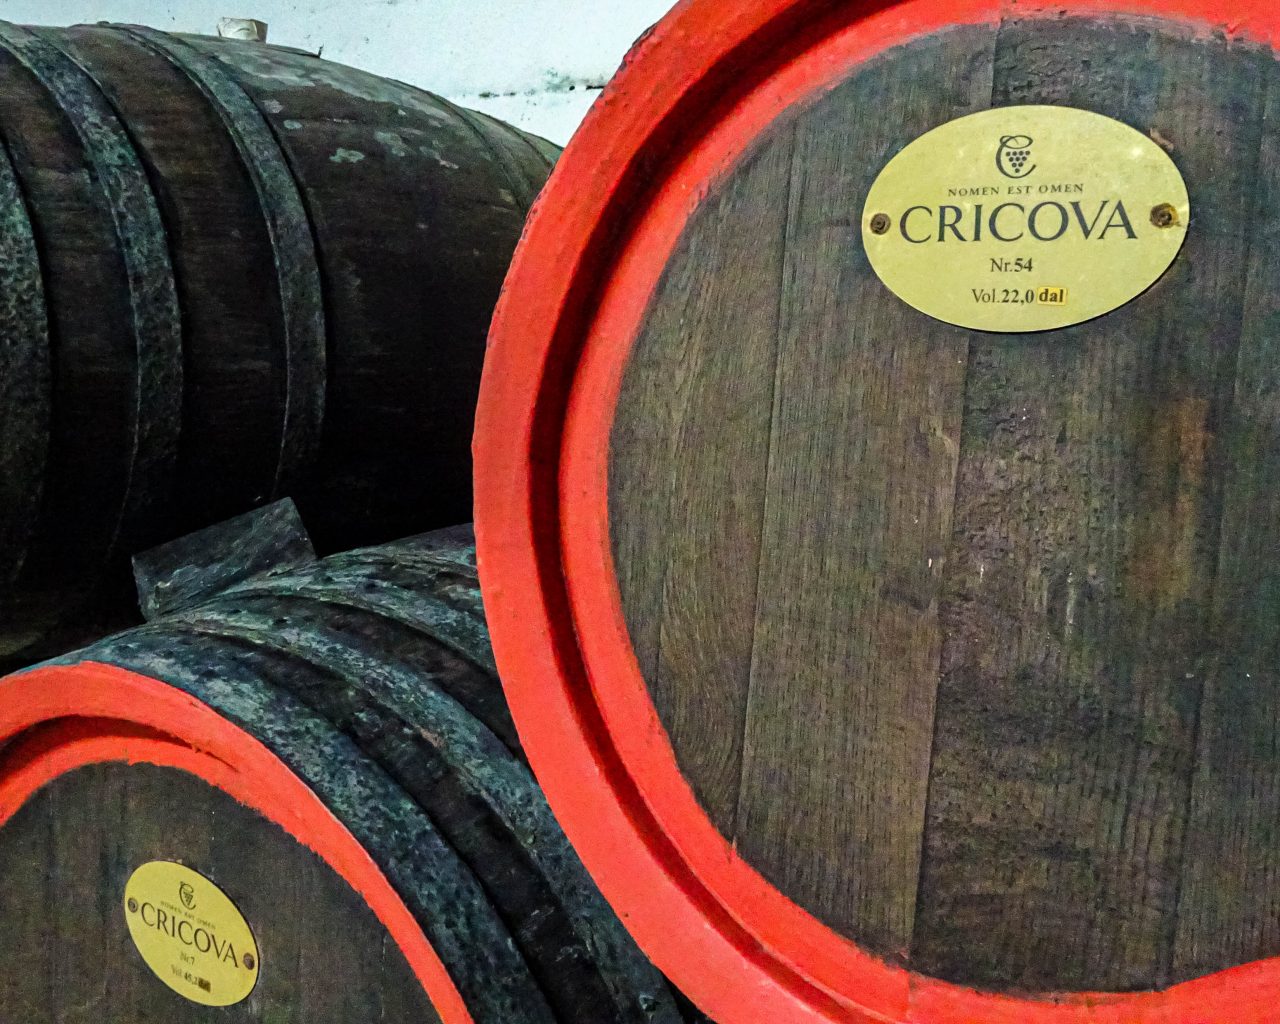 Cricova-barrels-op-elkaar-gestapeld